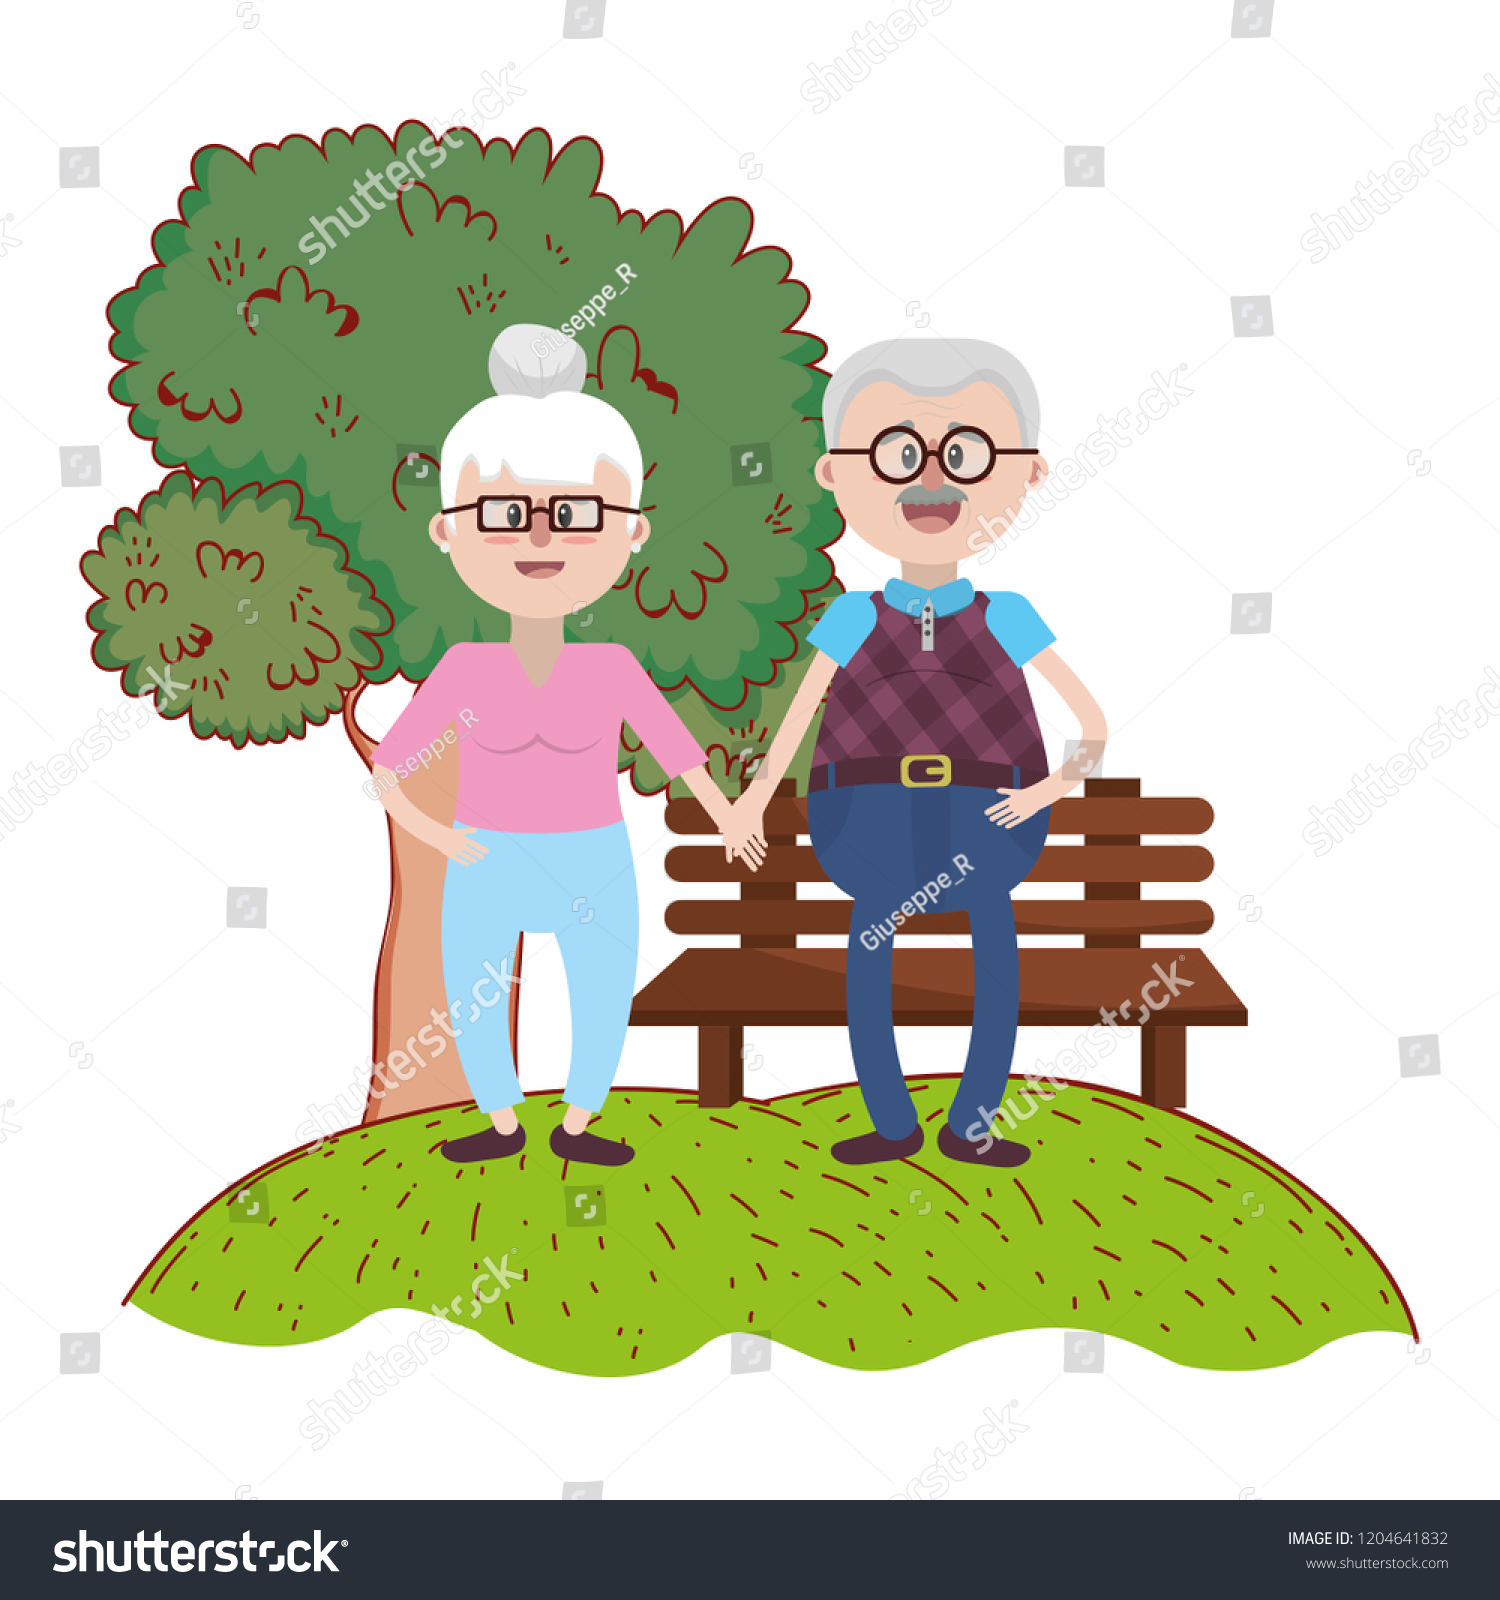 elderly couple cartoon - Royalty Free Stock Vector 1204641832 - Avopix.com